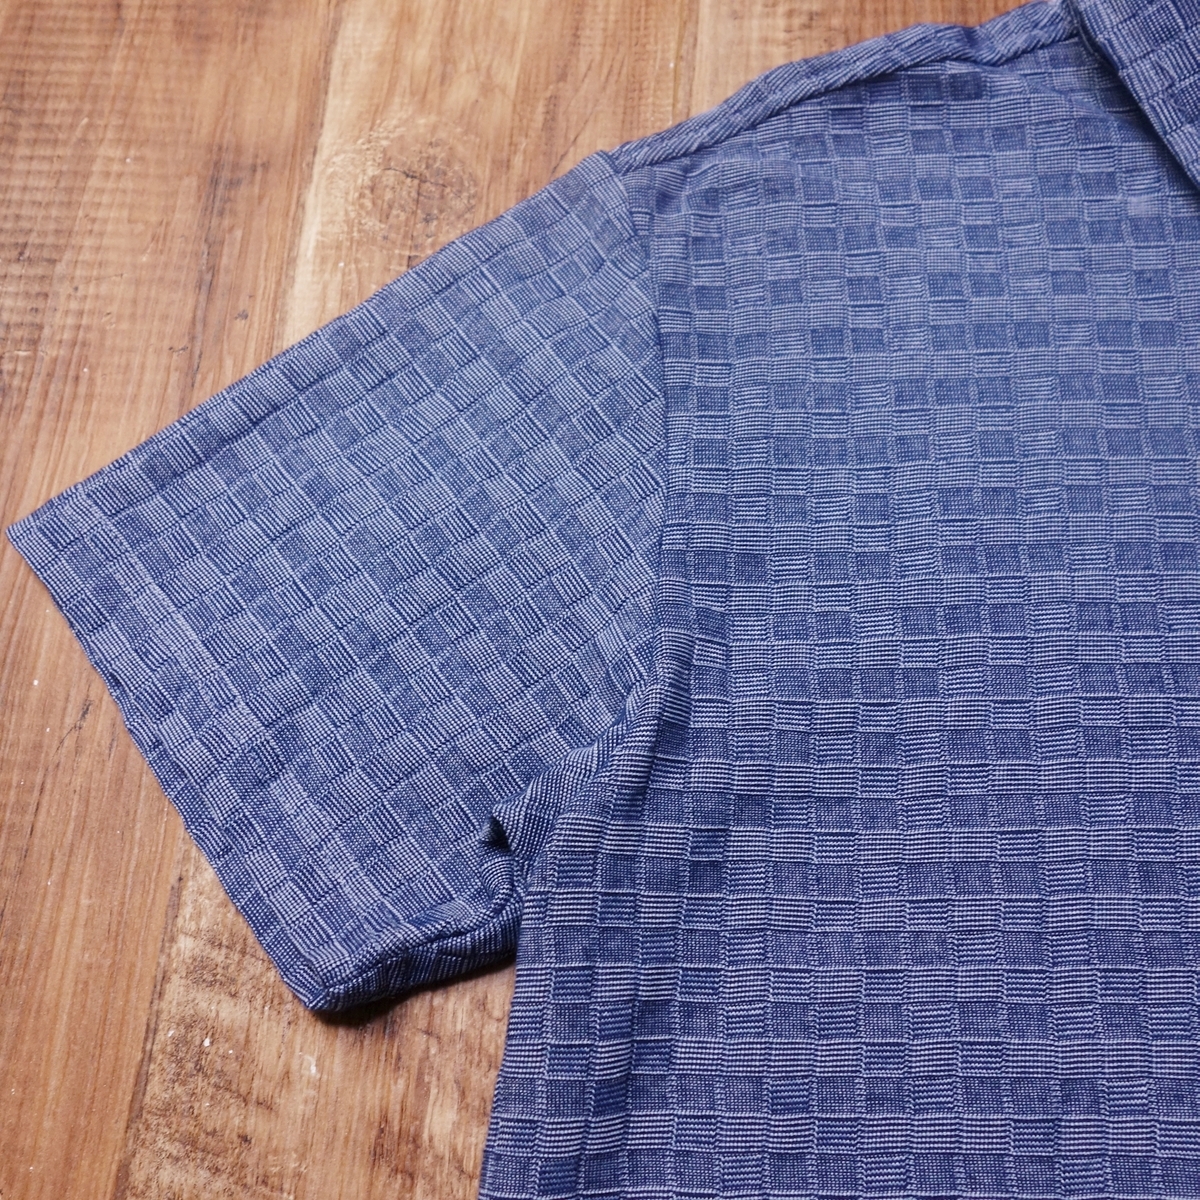 Mサイズ 半袖ポロシャツ メンズ JOHNY PULLS 古着 ブルー LX40